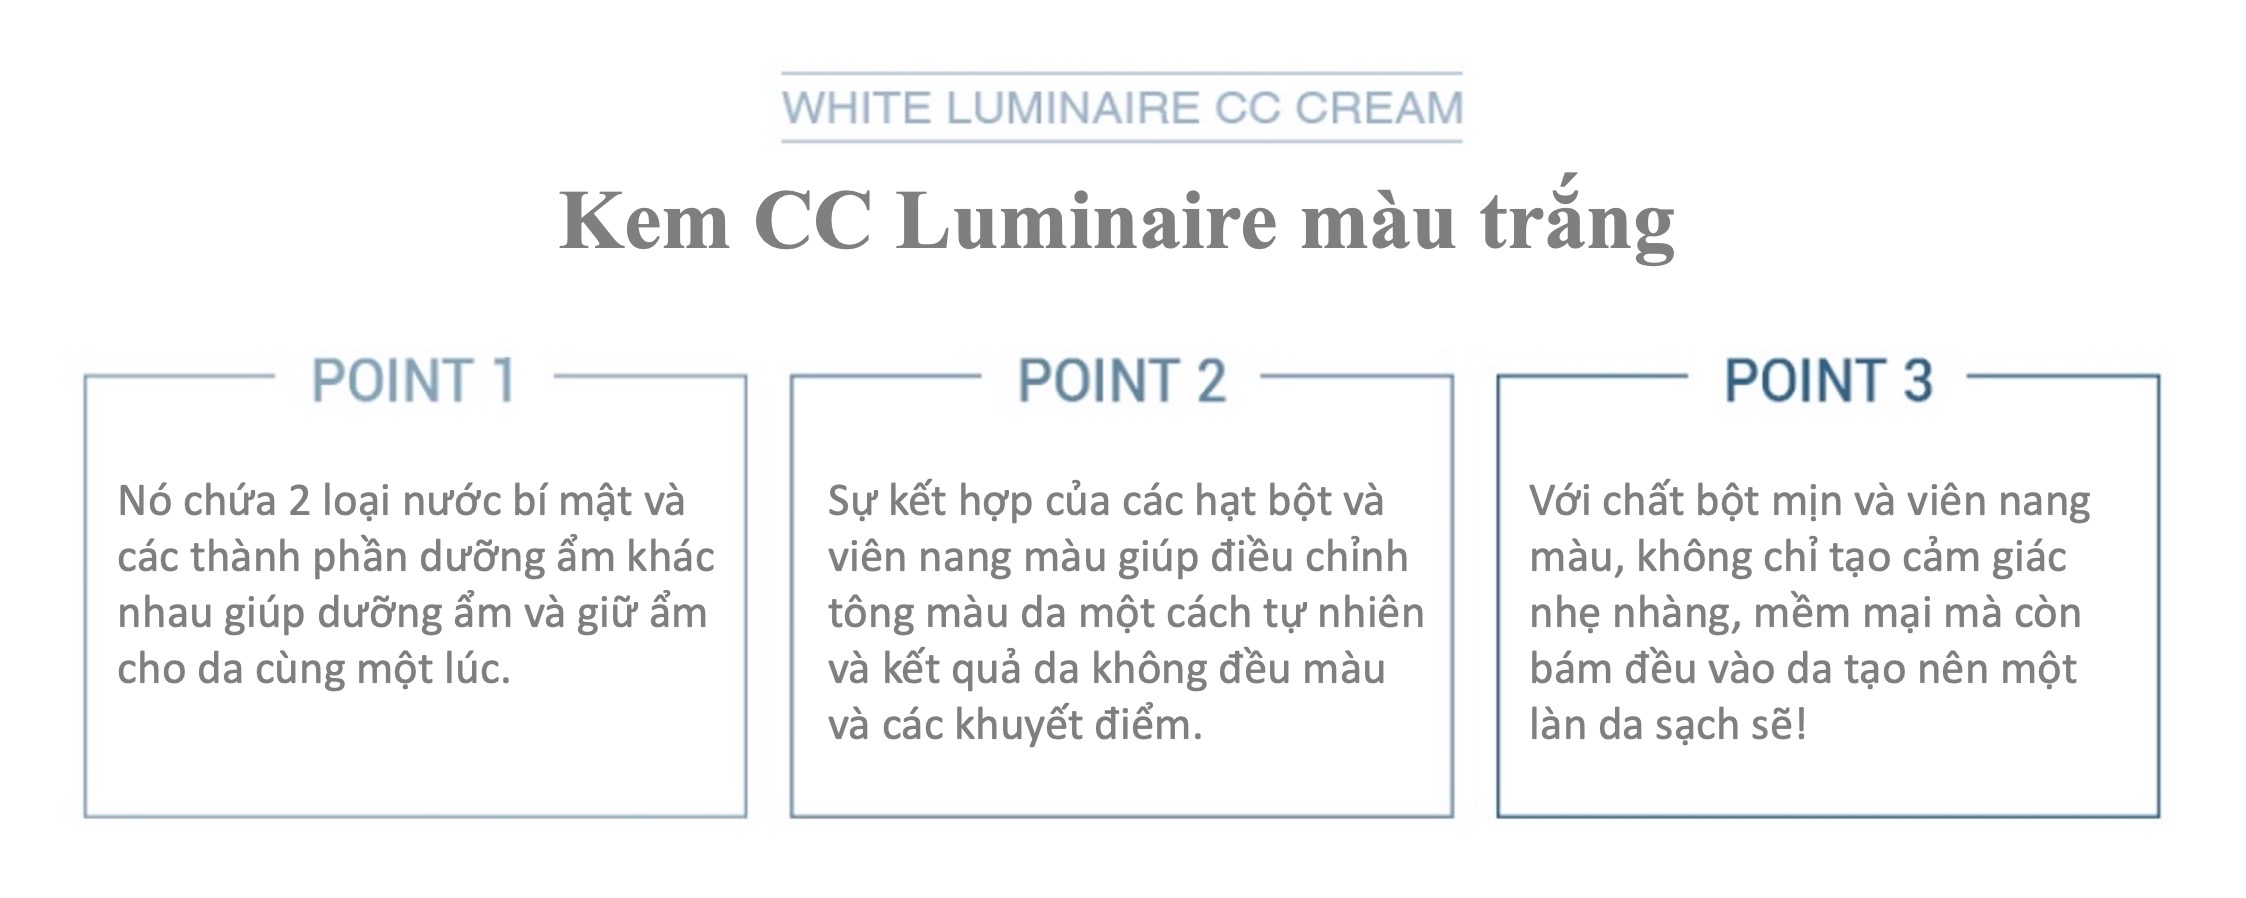 KEM TRANG ĐIỂM NOTS WHITE LUMINAIRE CC CREAM 7